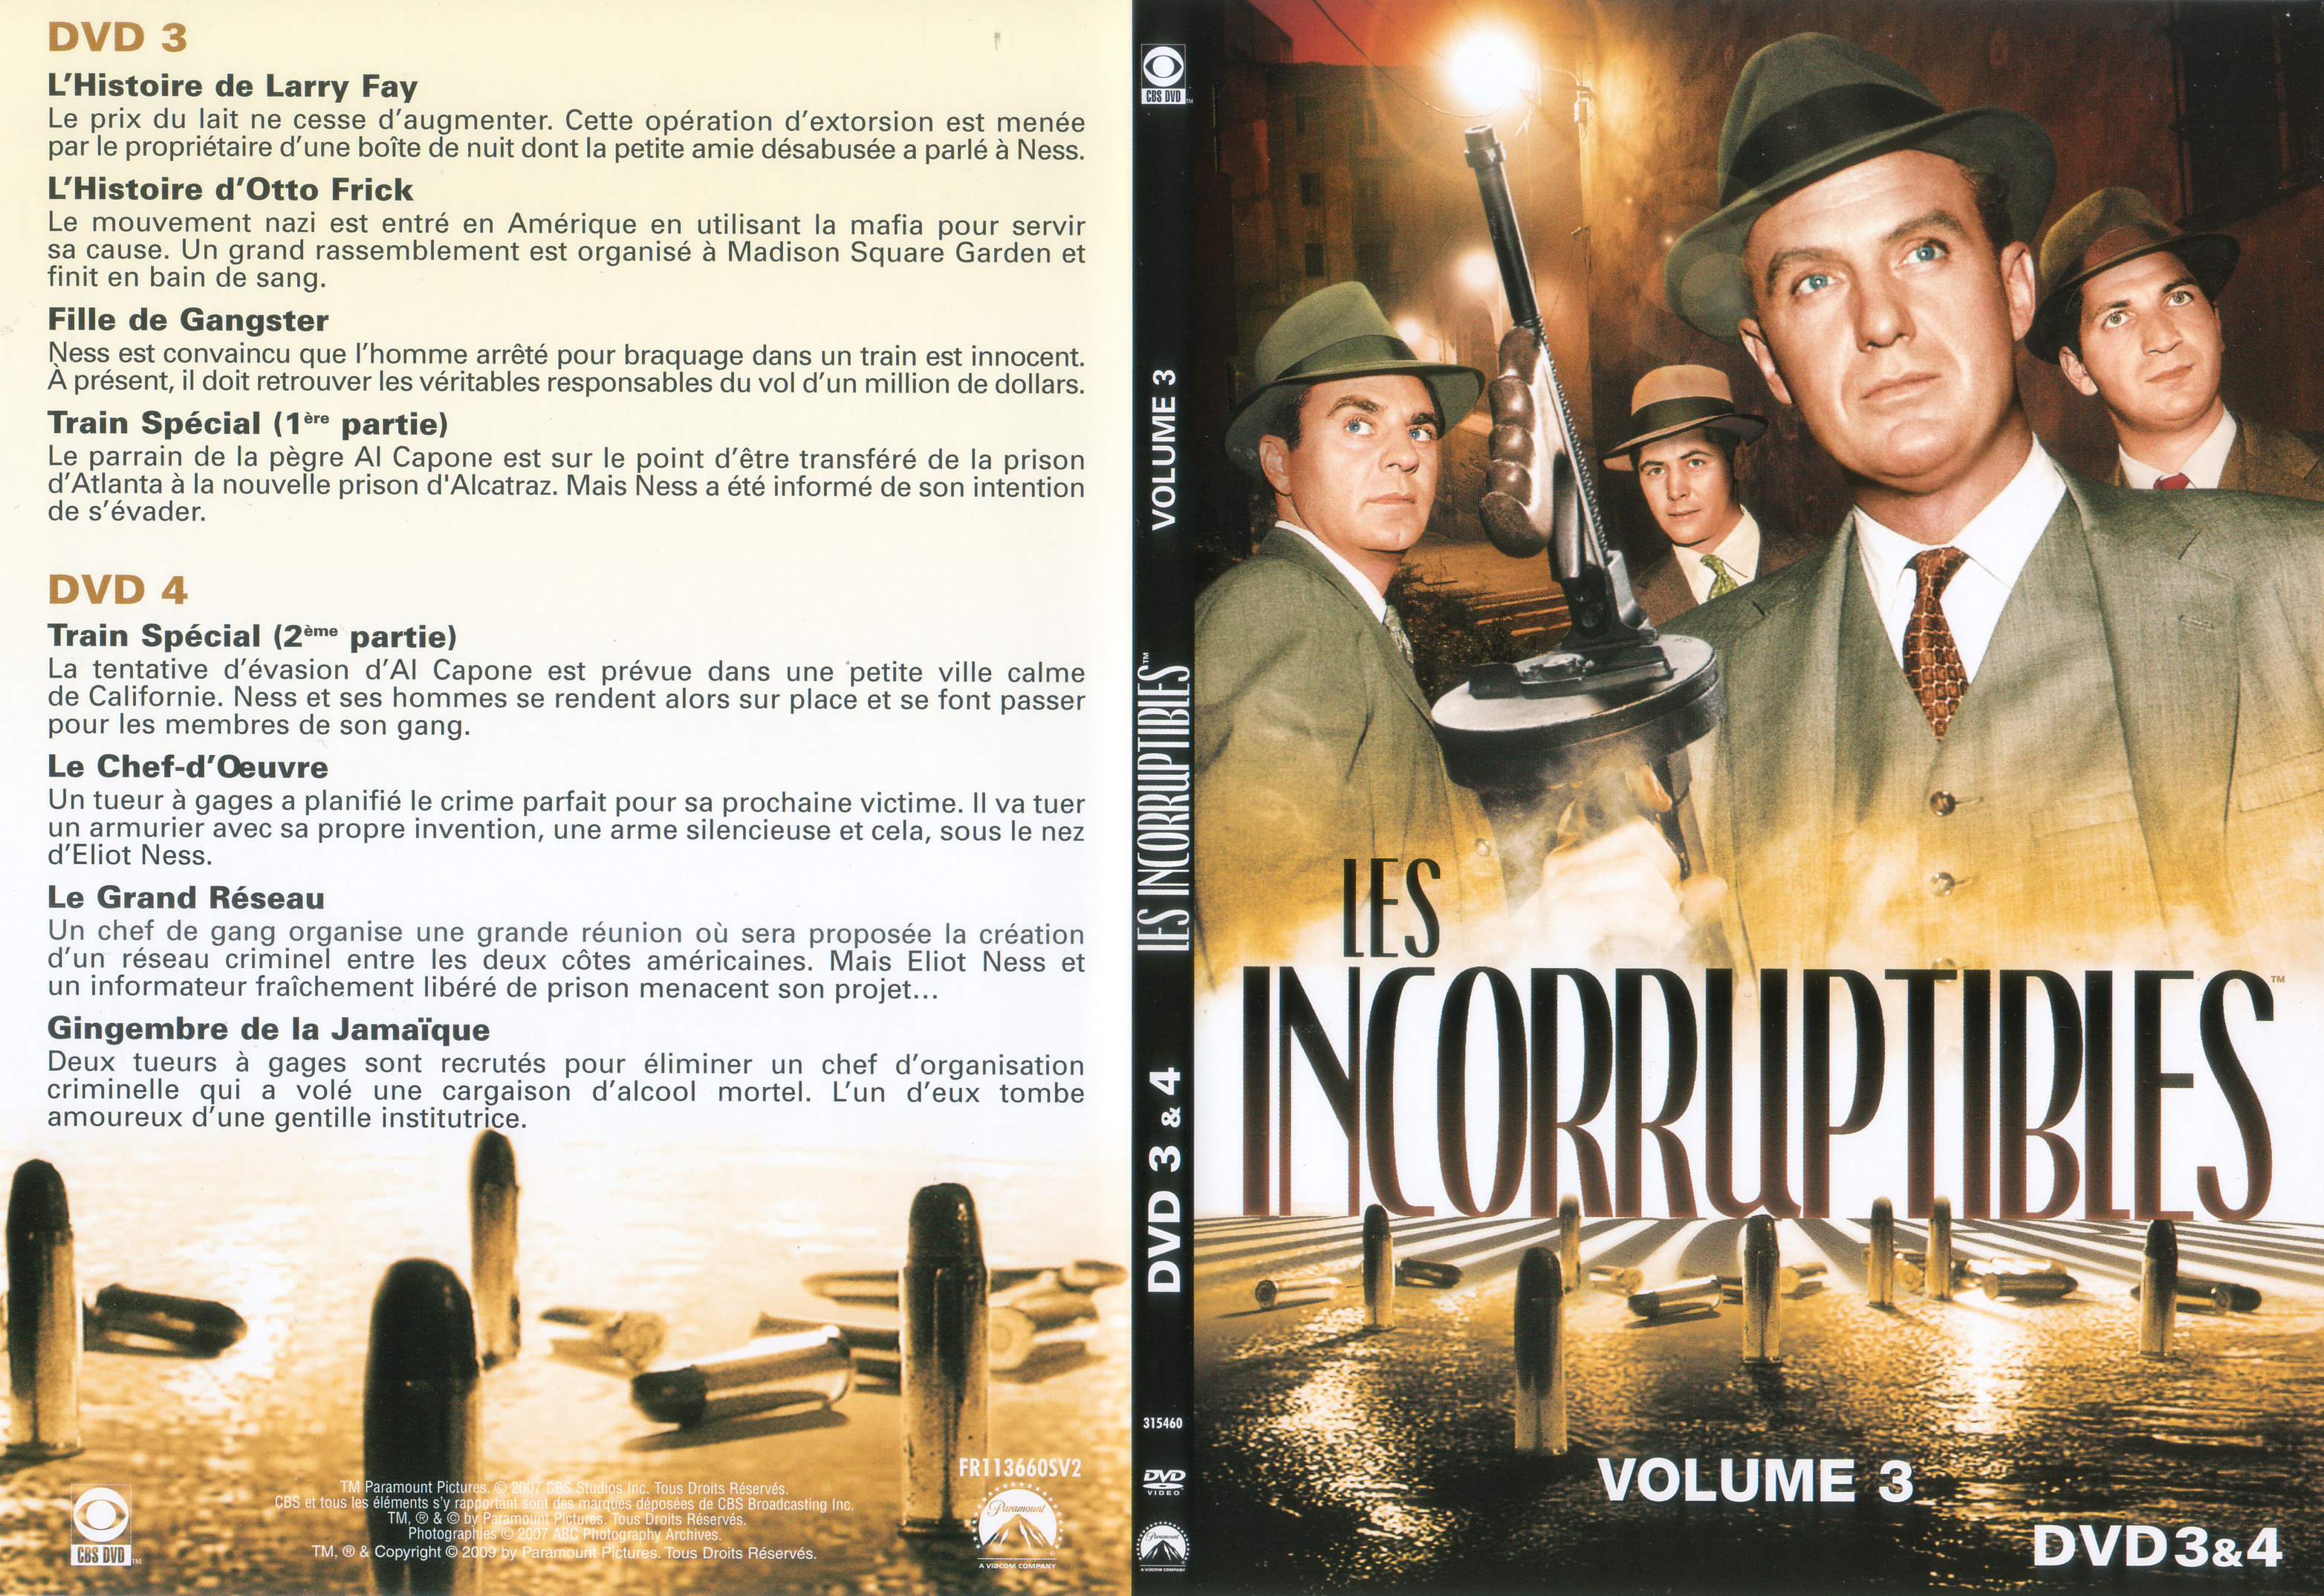 Jaquette DVD Les incorruptibles vol 03 DVD 2